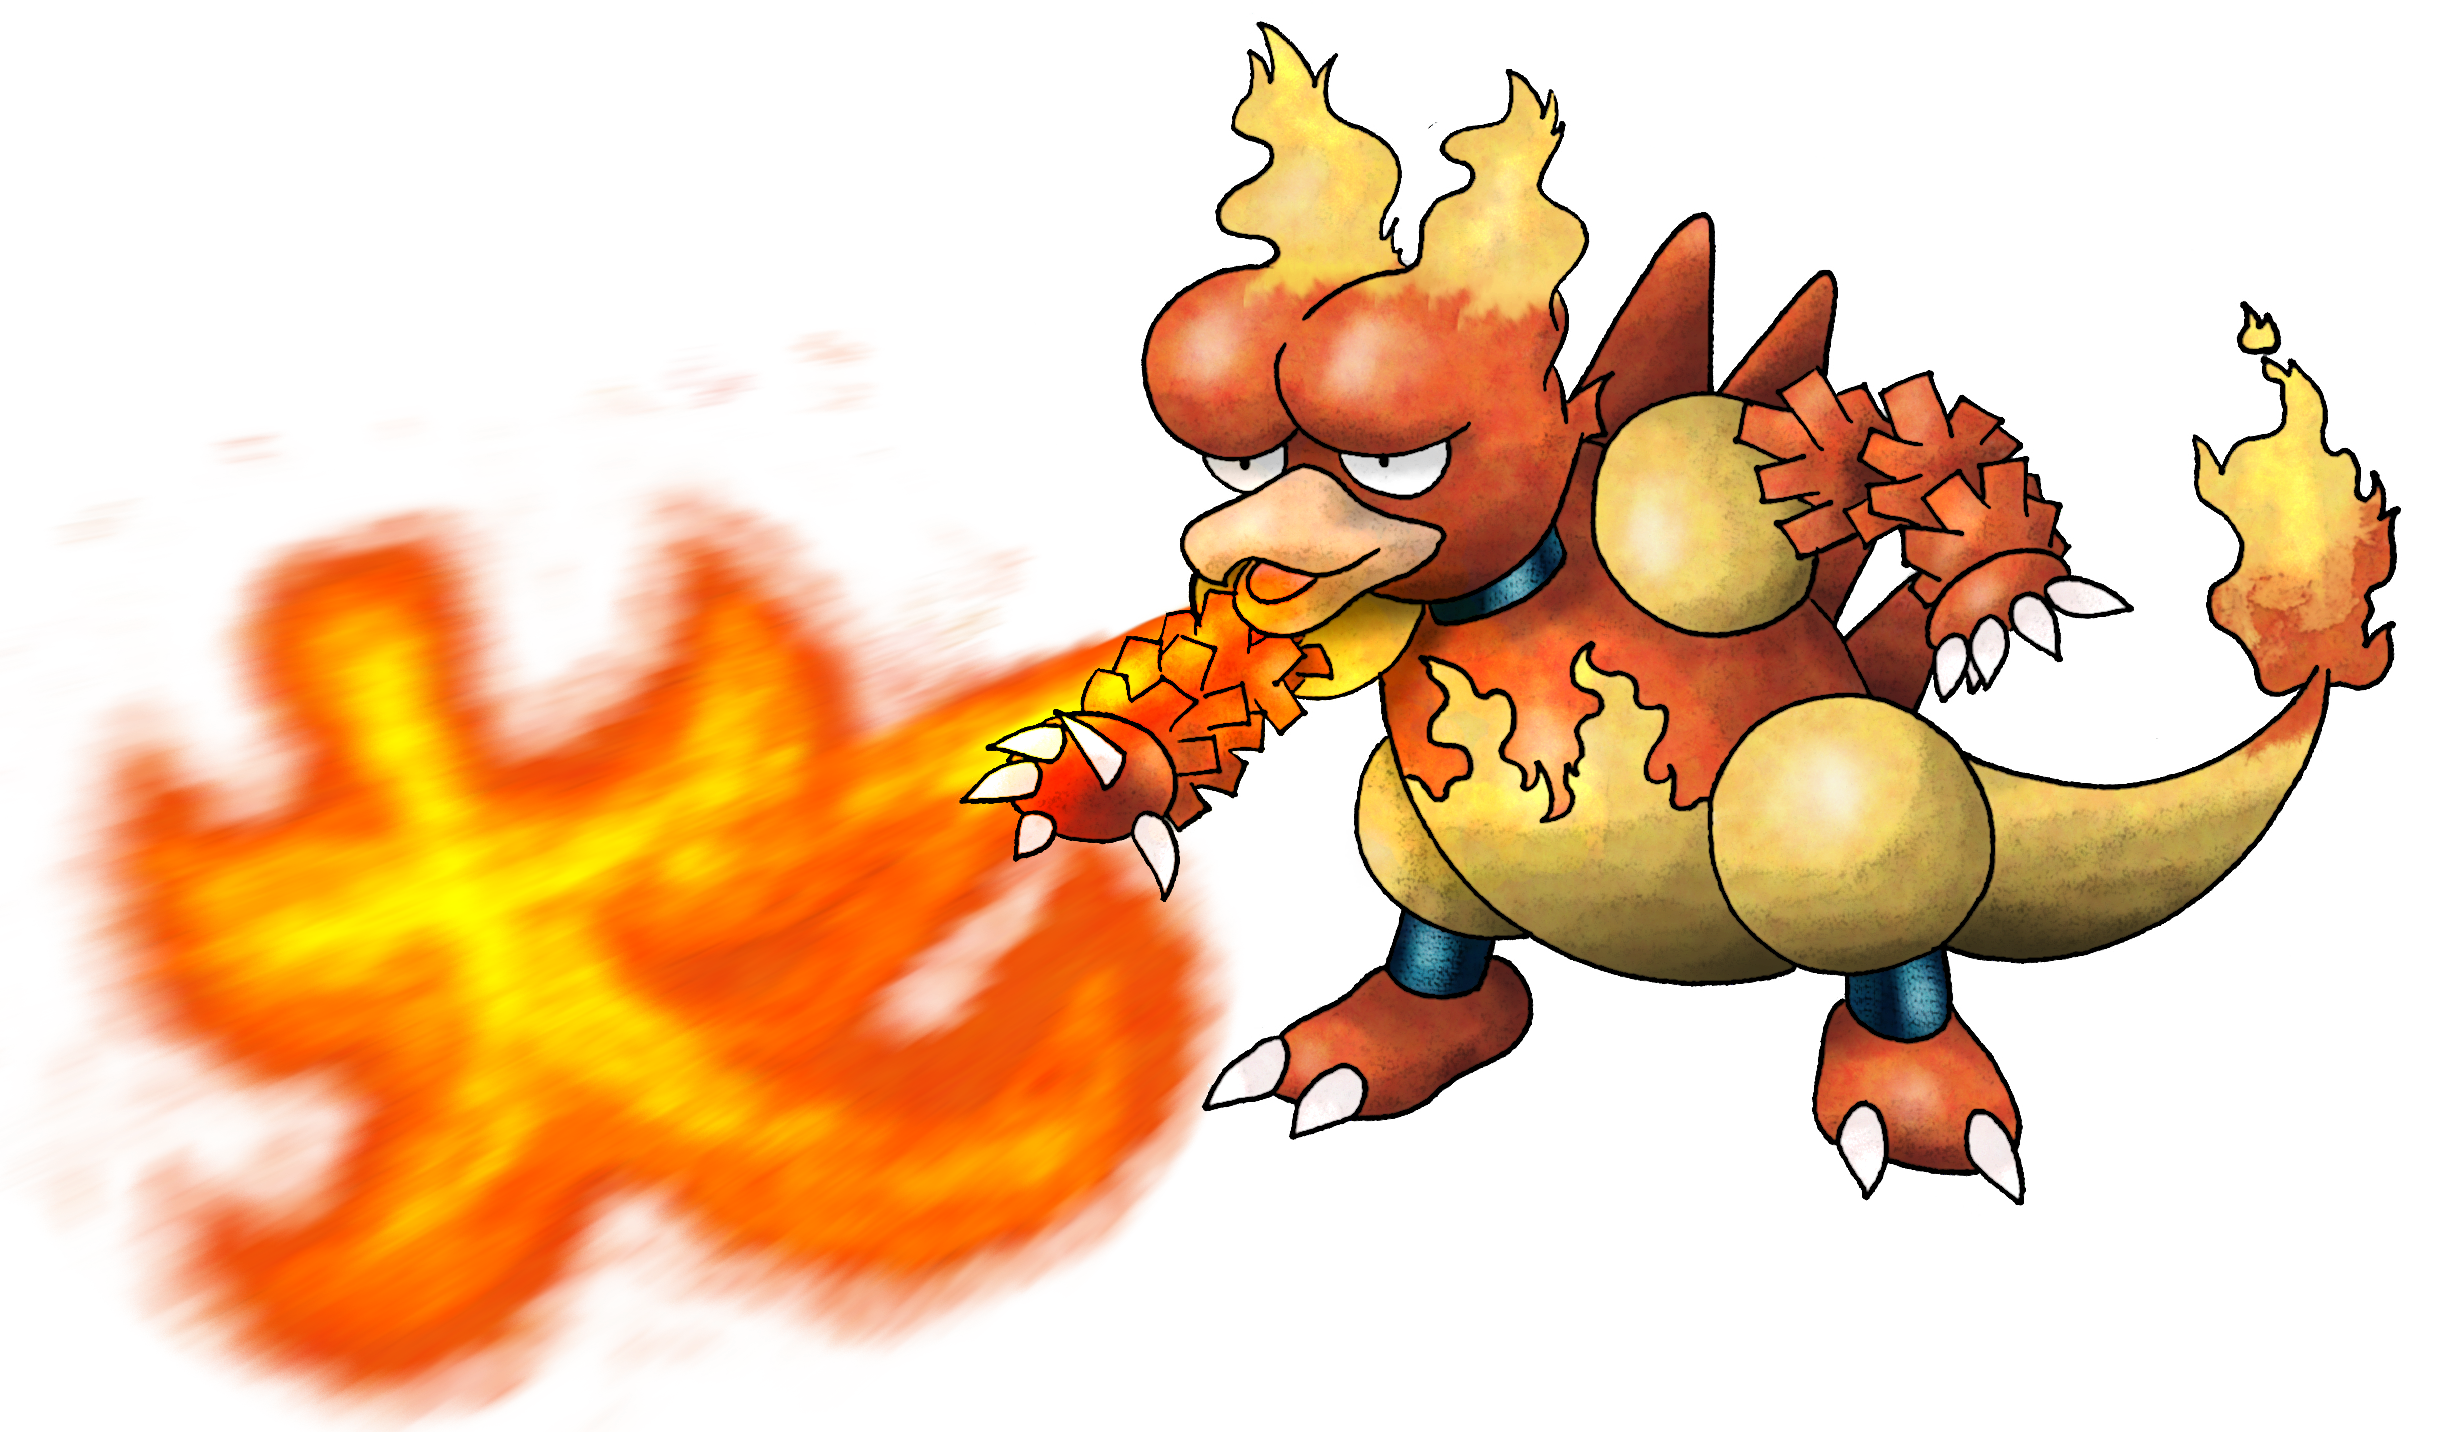 magmar-used-fire-blast-game-art-hq-pokemon-tribute-by-macuarrorro